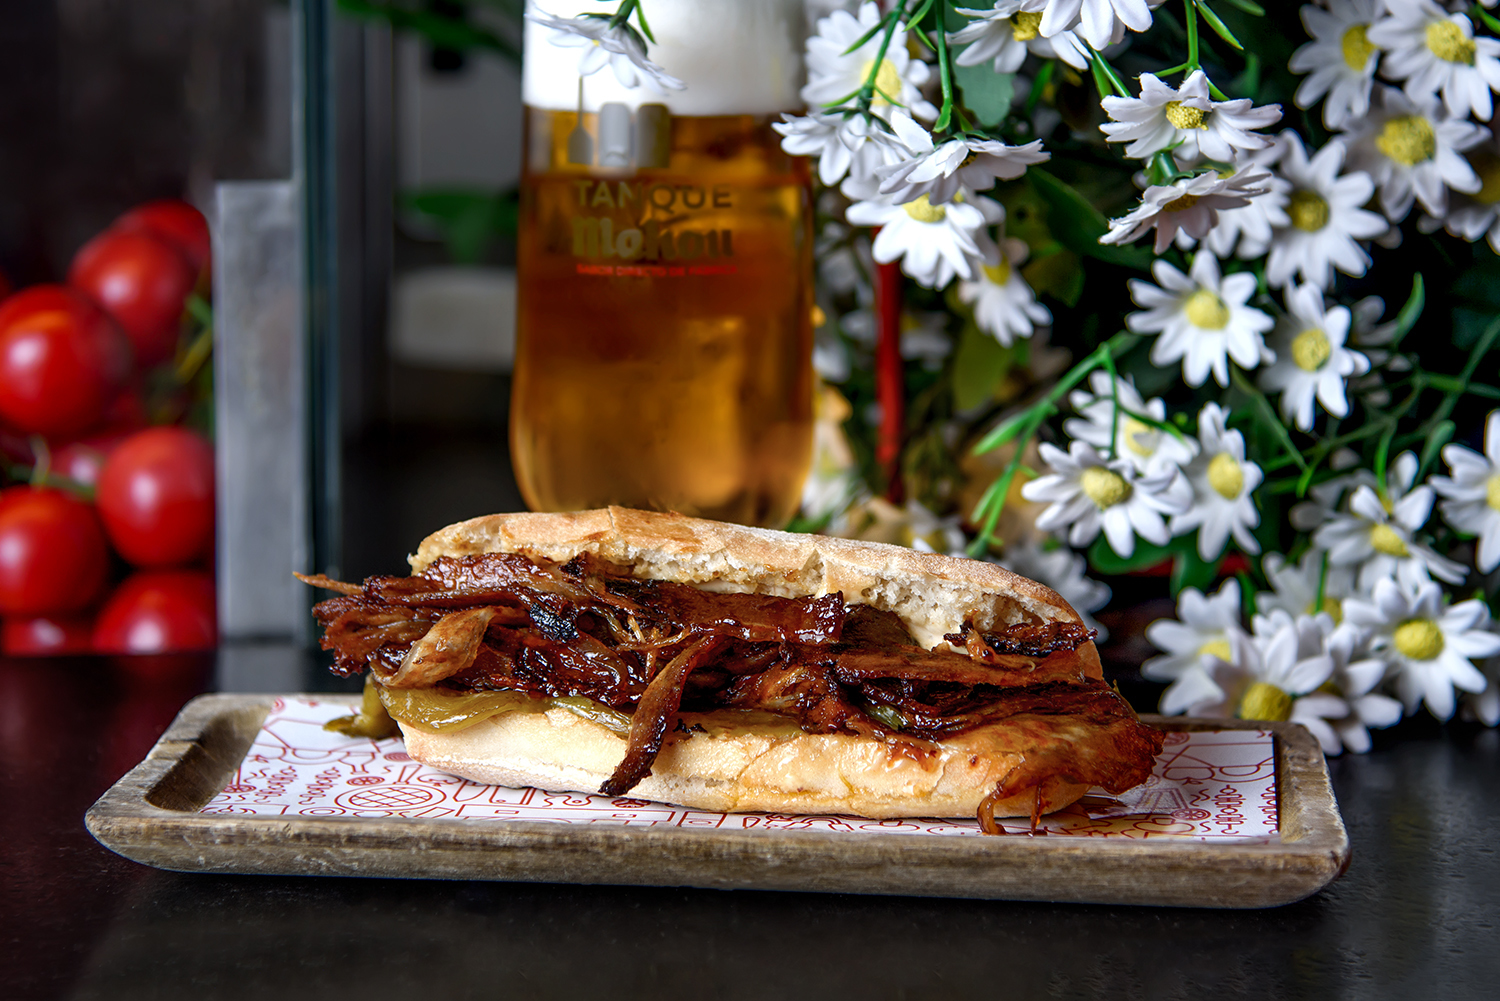 Bacon Sandwich from La Parrilla de la Reina.